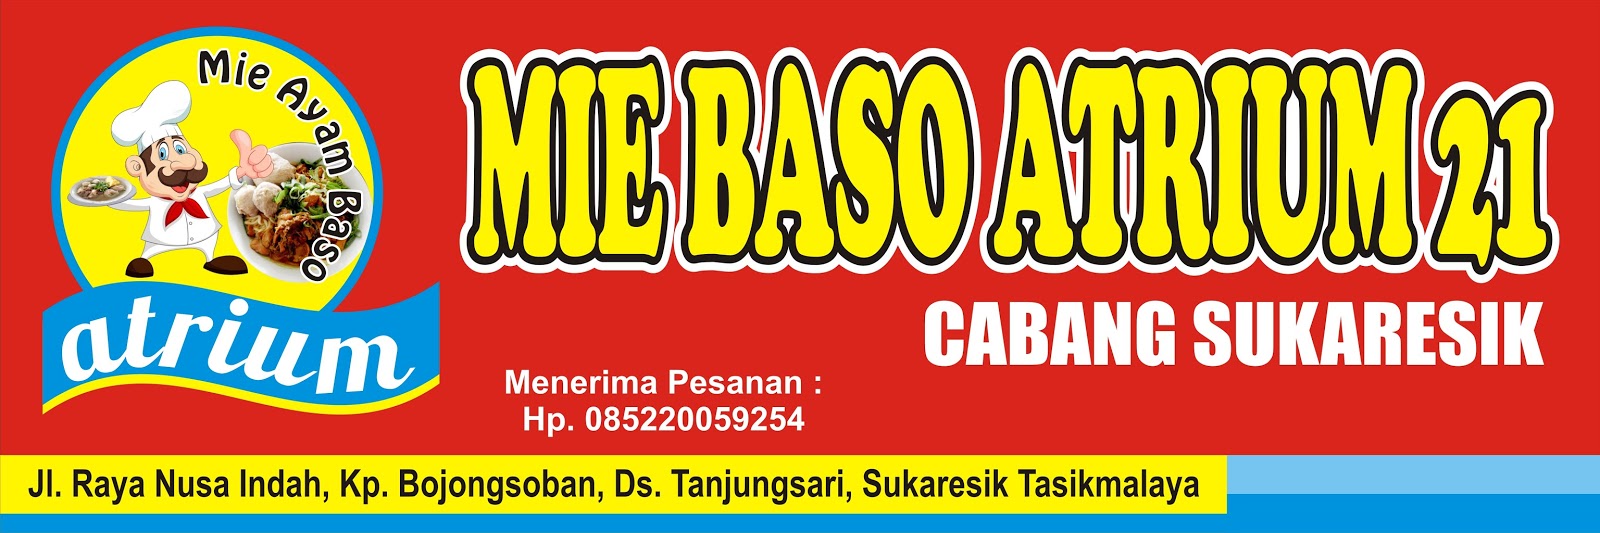 Download Spanduk Mie Bakso.cdr  Mie Ayam  Seblak  KARYAKU